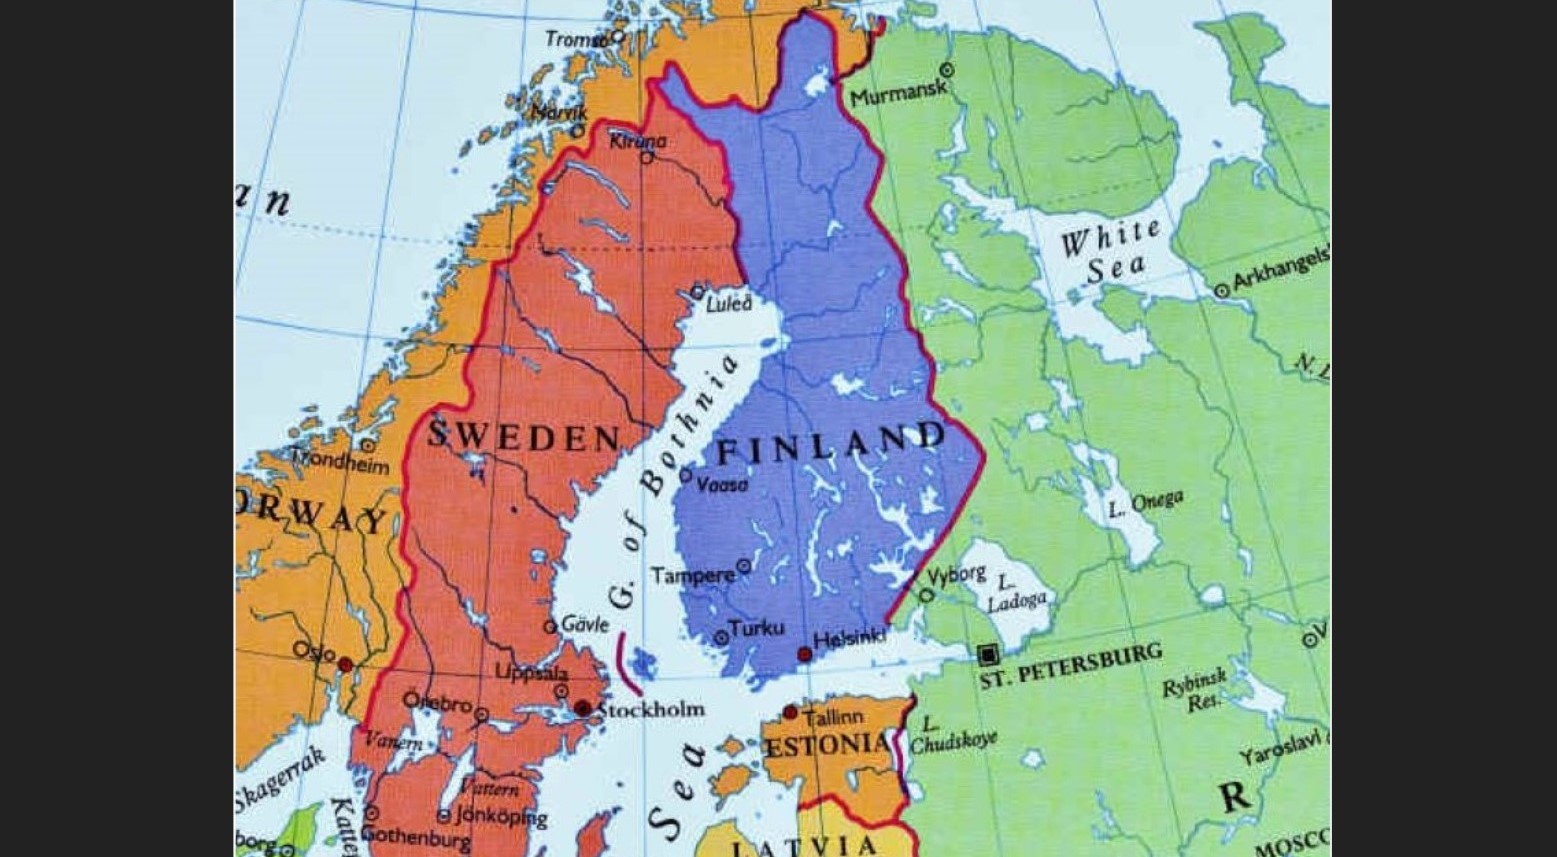 Какие субъекты граничат с финляндией. Граница России и Финляндии на карте. С кем граничит Финляндия на карте. Финляндия на карте с Россией. Финляндия на карте и Швеция граничит с Россией.